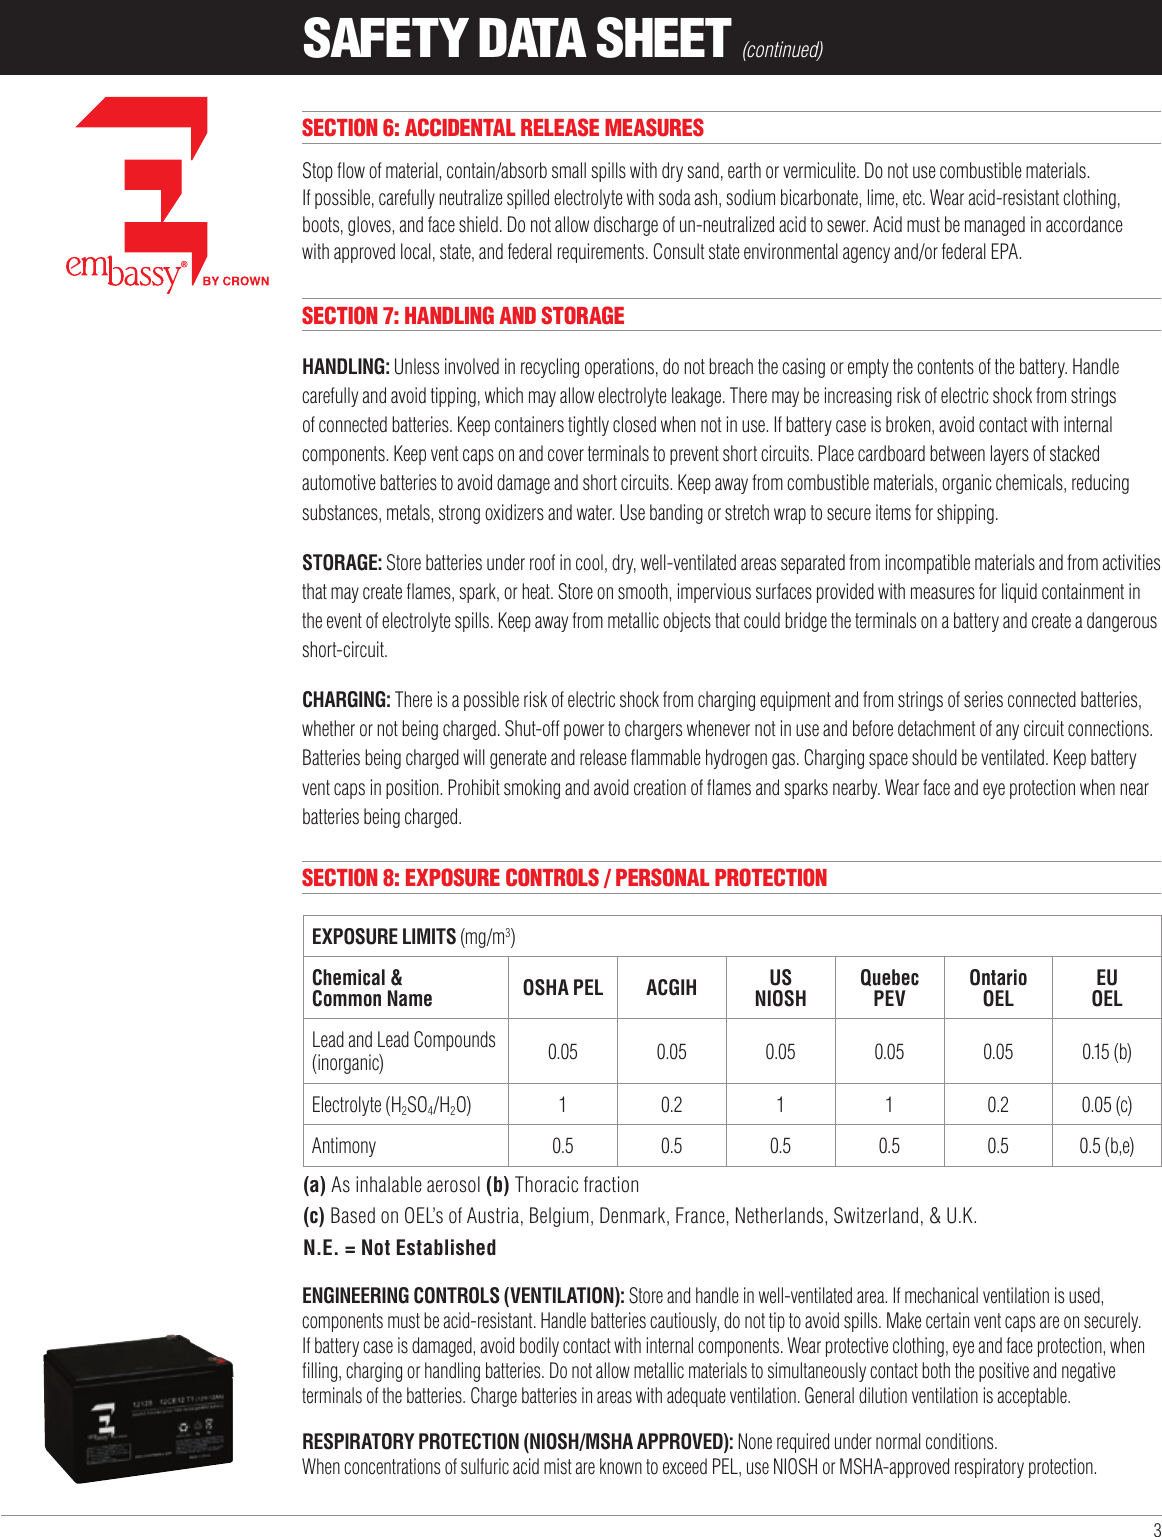 Page 3 of 8 - 551452 2 Liberty Battery Safety Data Sheet